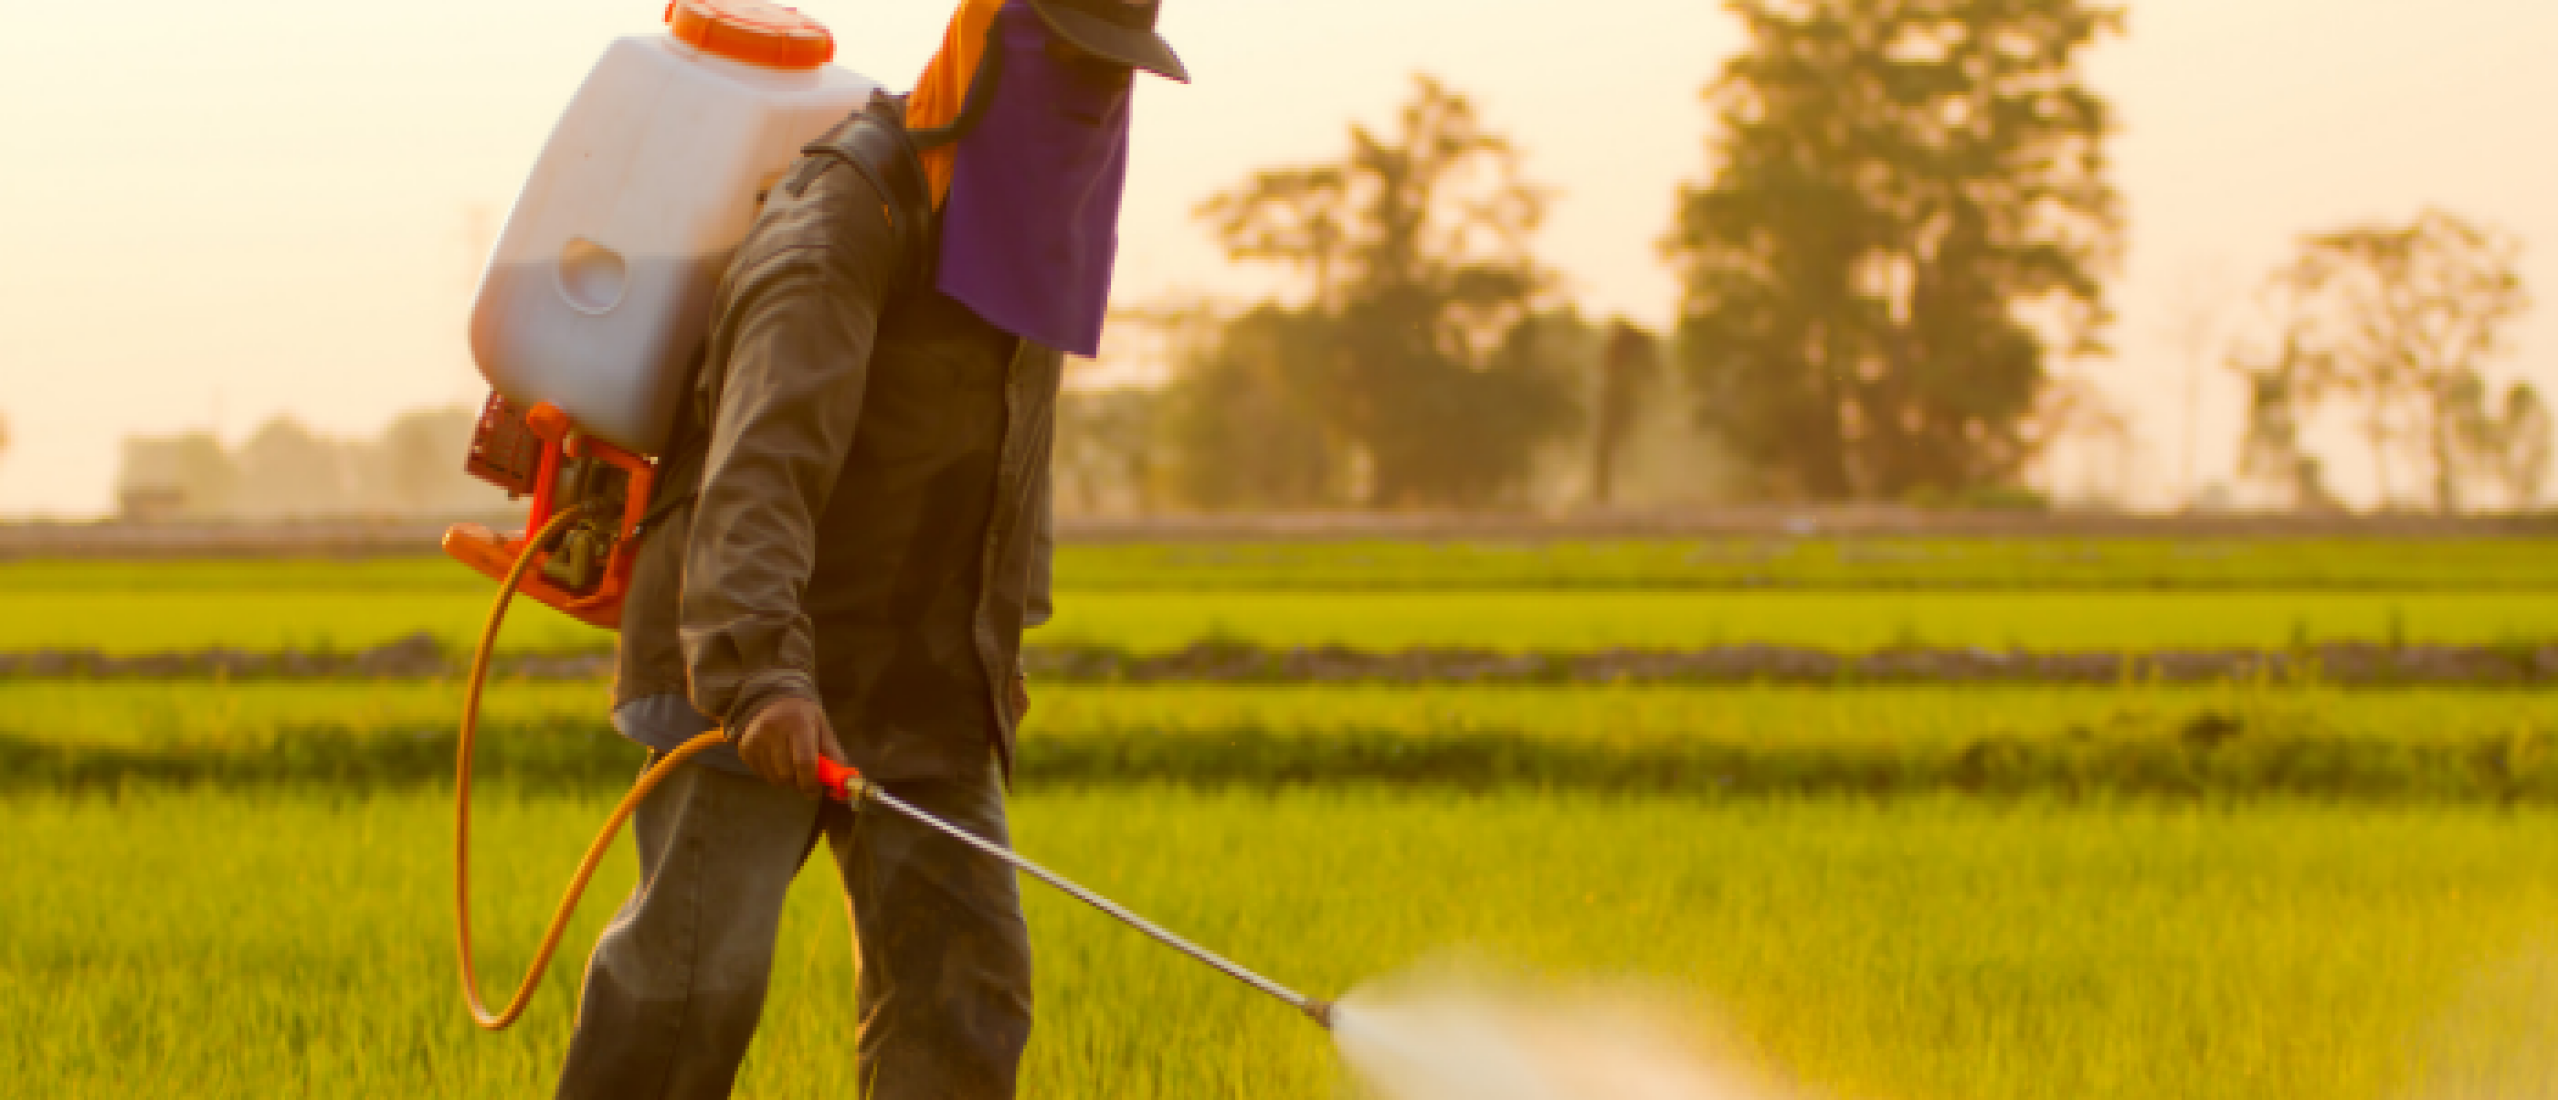 Glutenintolerantie of pesticide vervuiling?